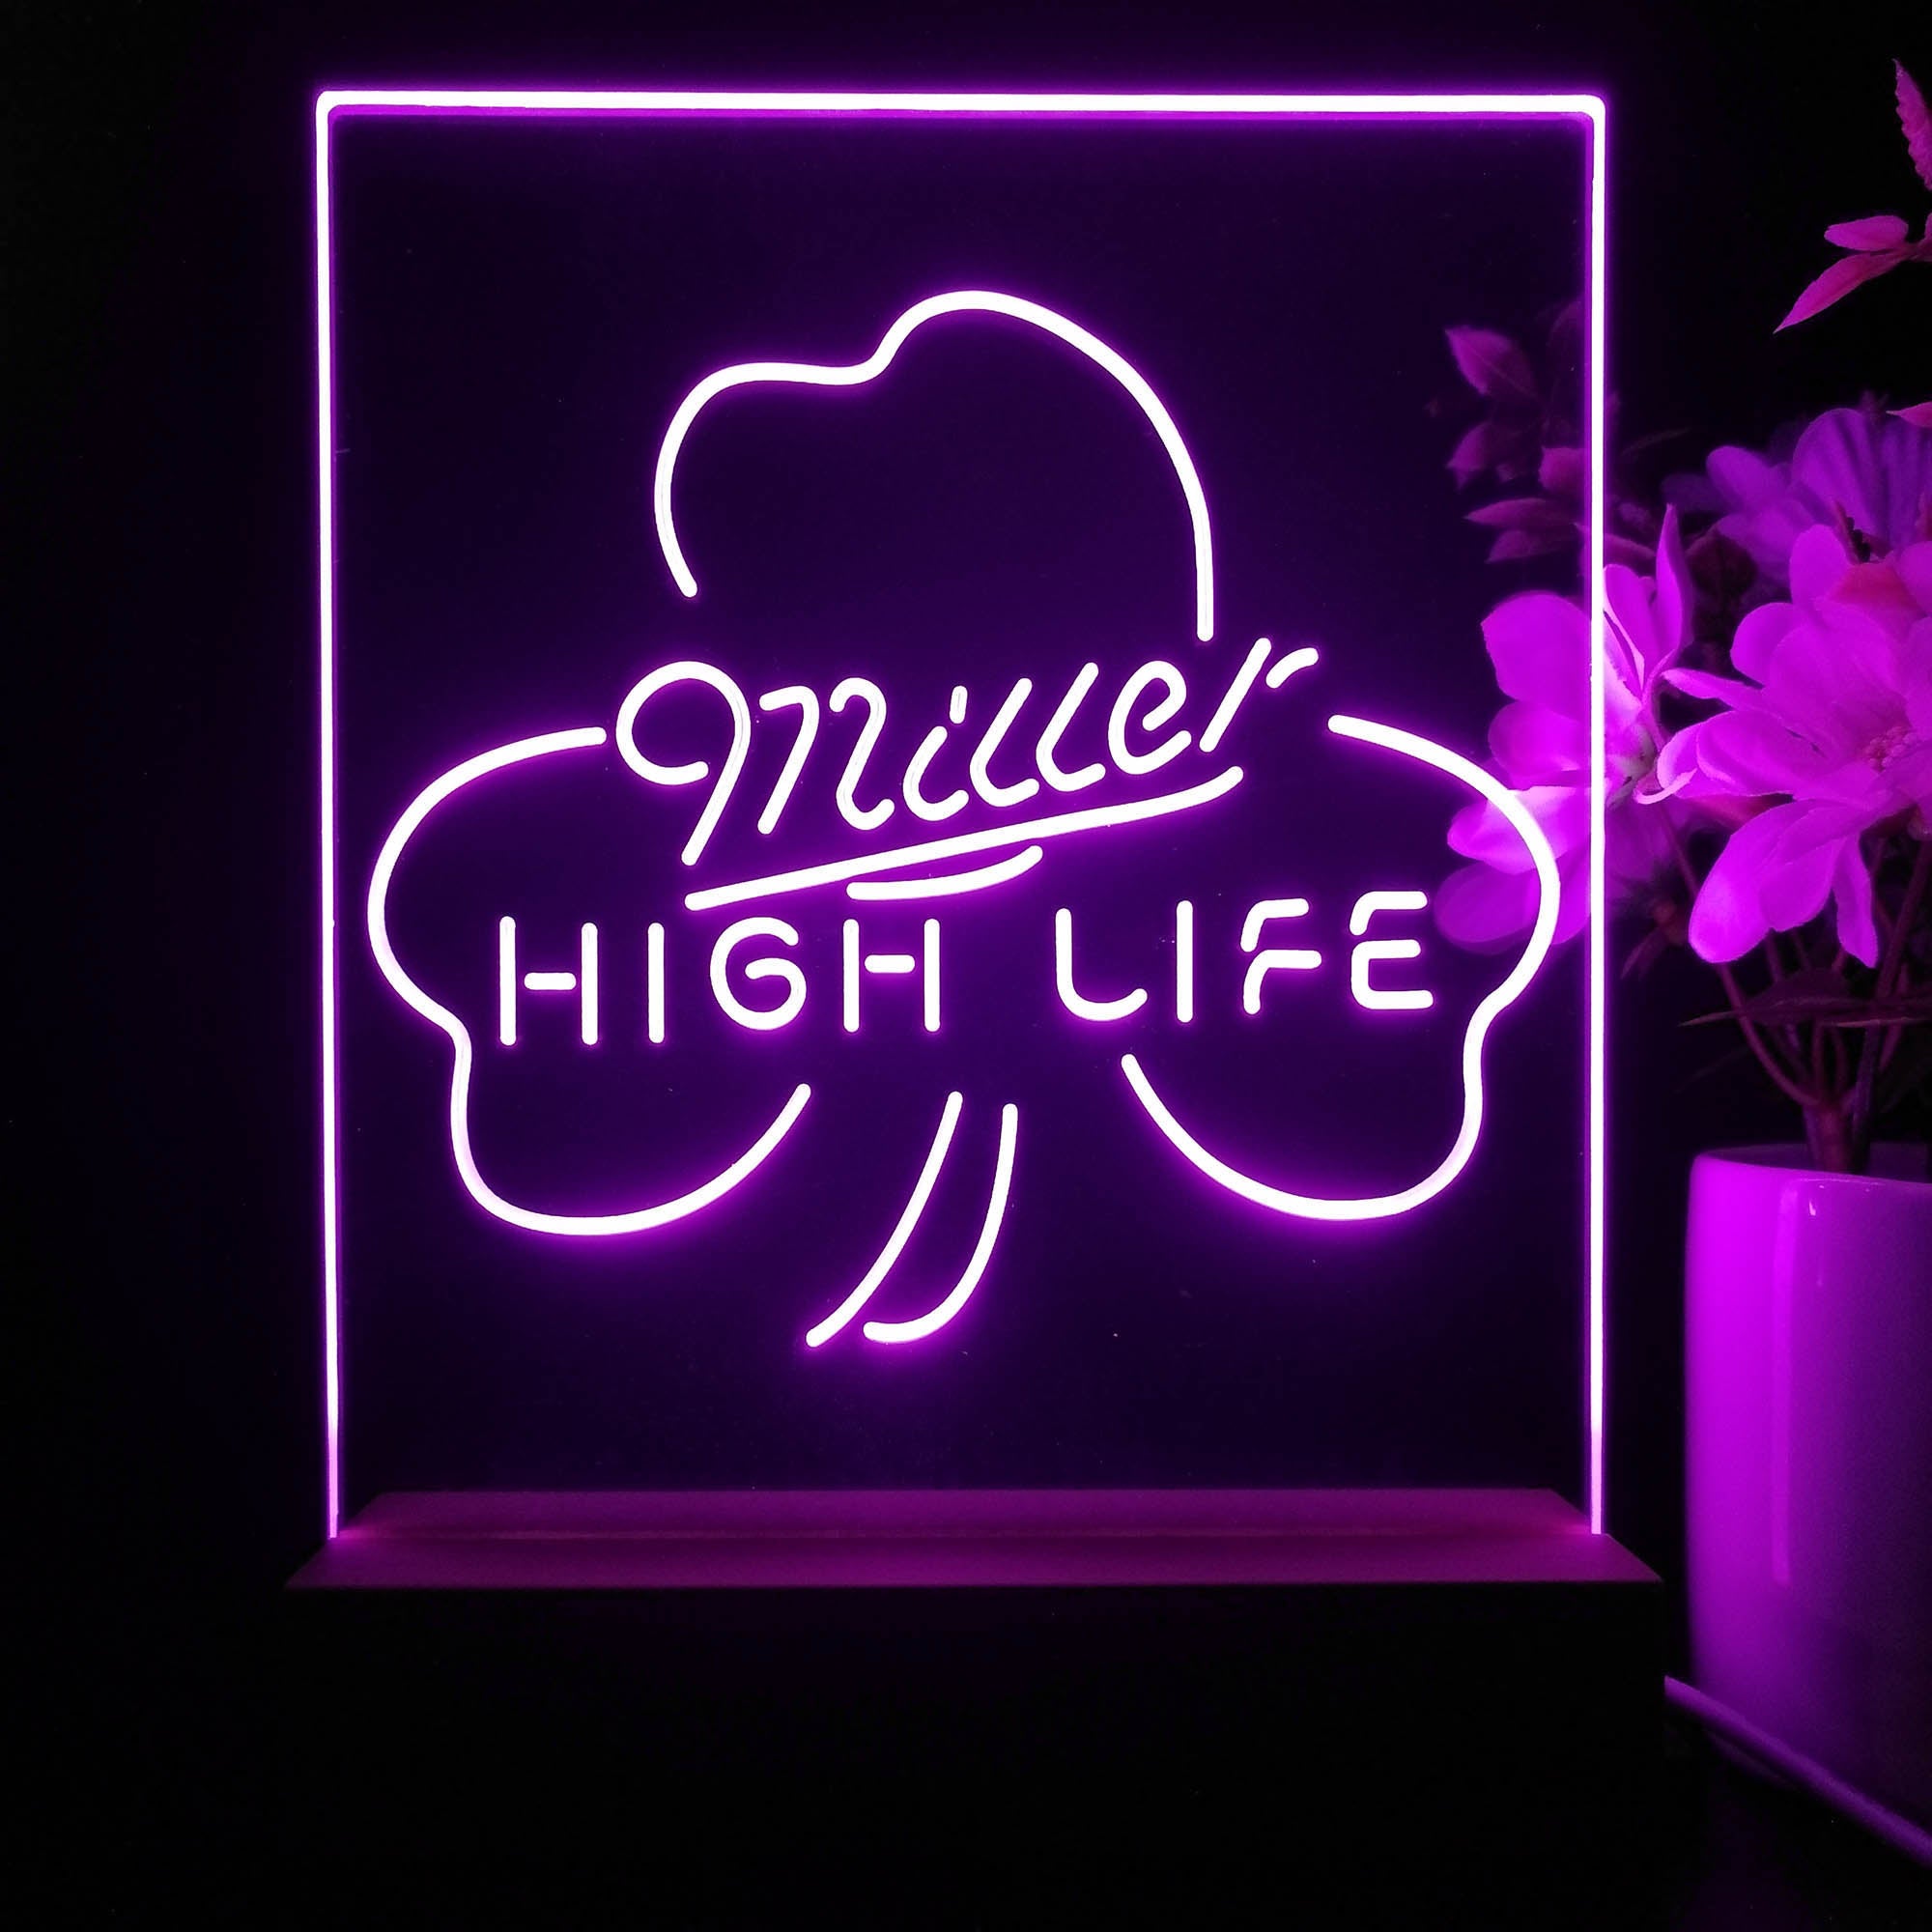 Miller High Life Shamrock 3D Illusion Night Light Desk Lamp